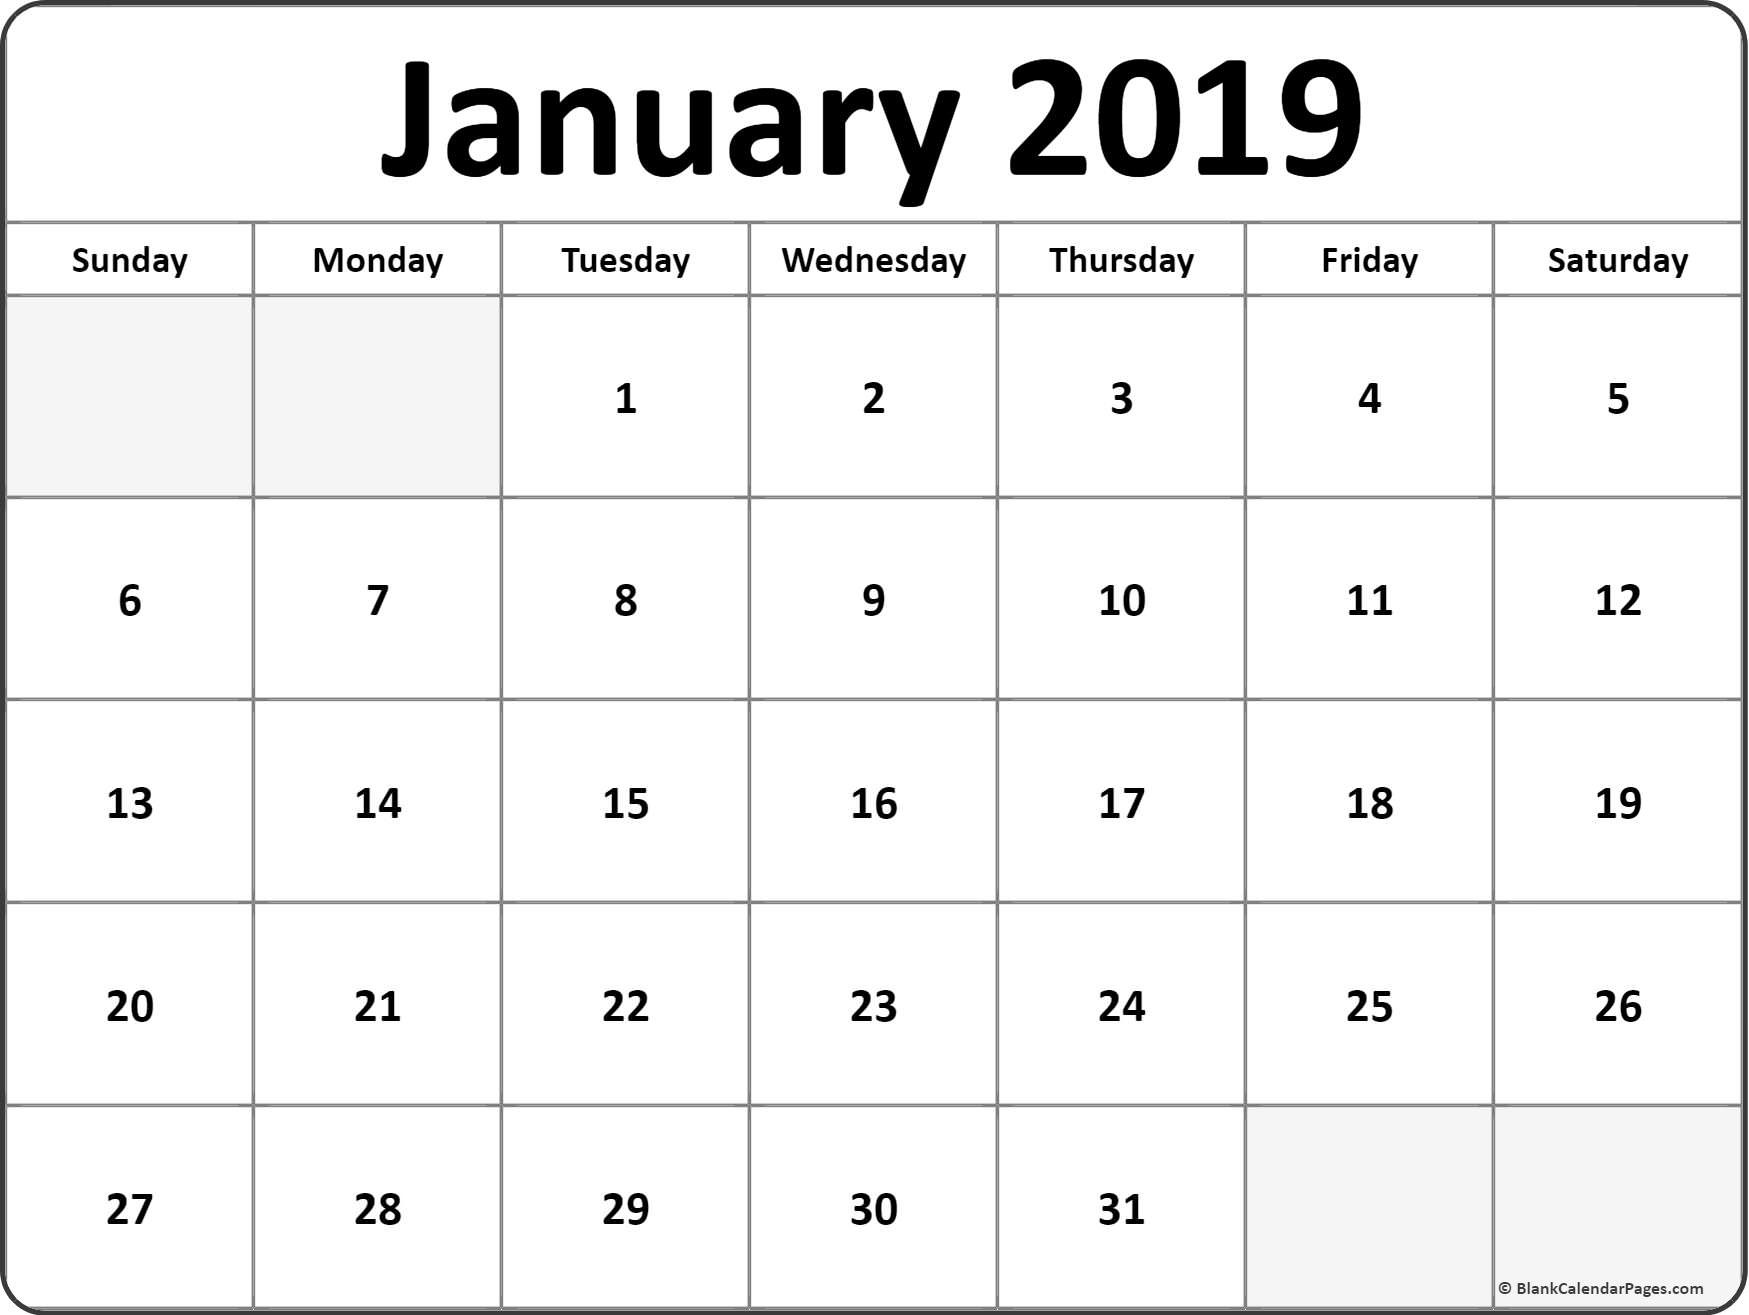 January 2019 blank calendar printable collection